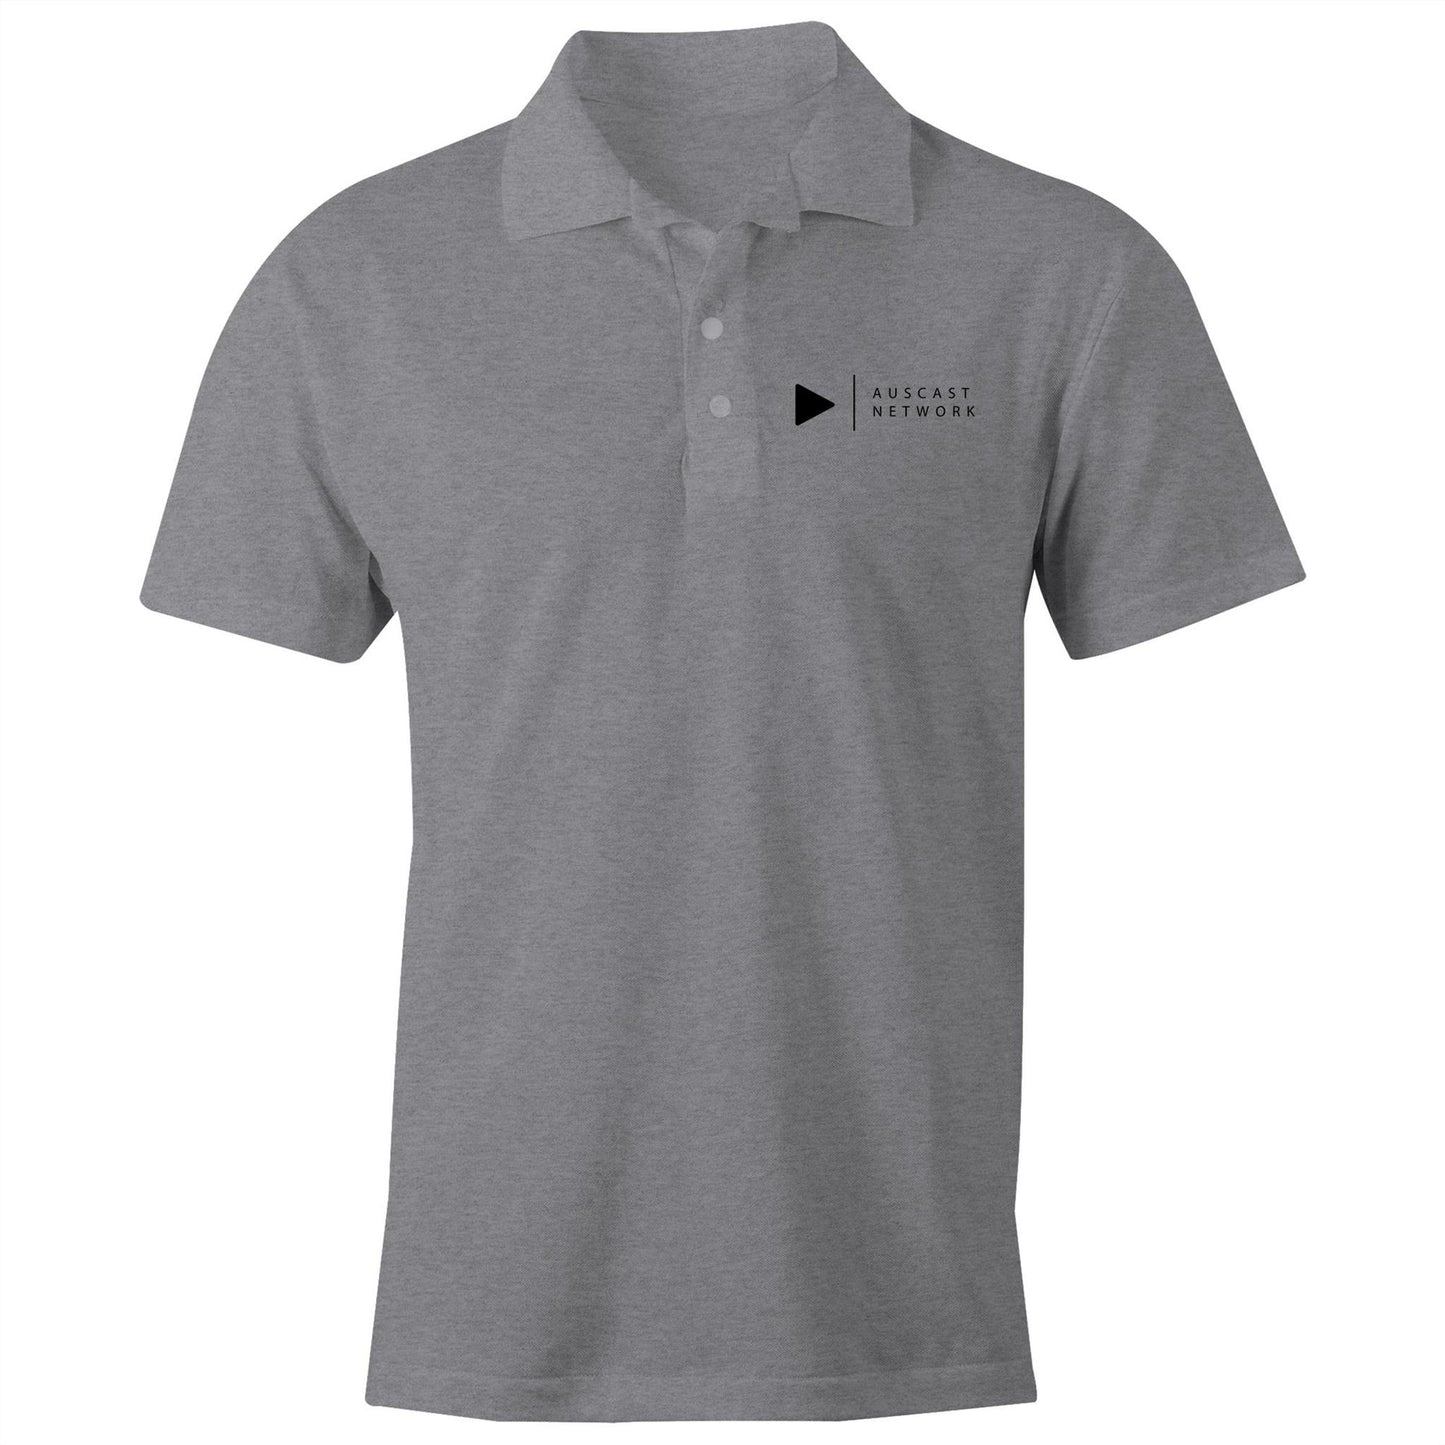 Auscast Network (black logo) - AS Colour Chad - S/S Polo Shirt